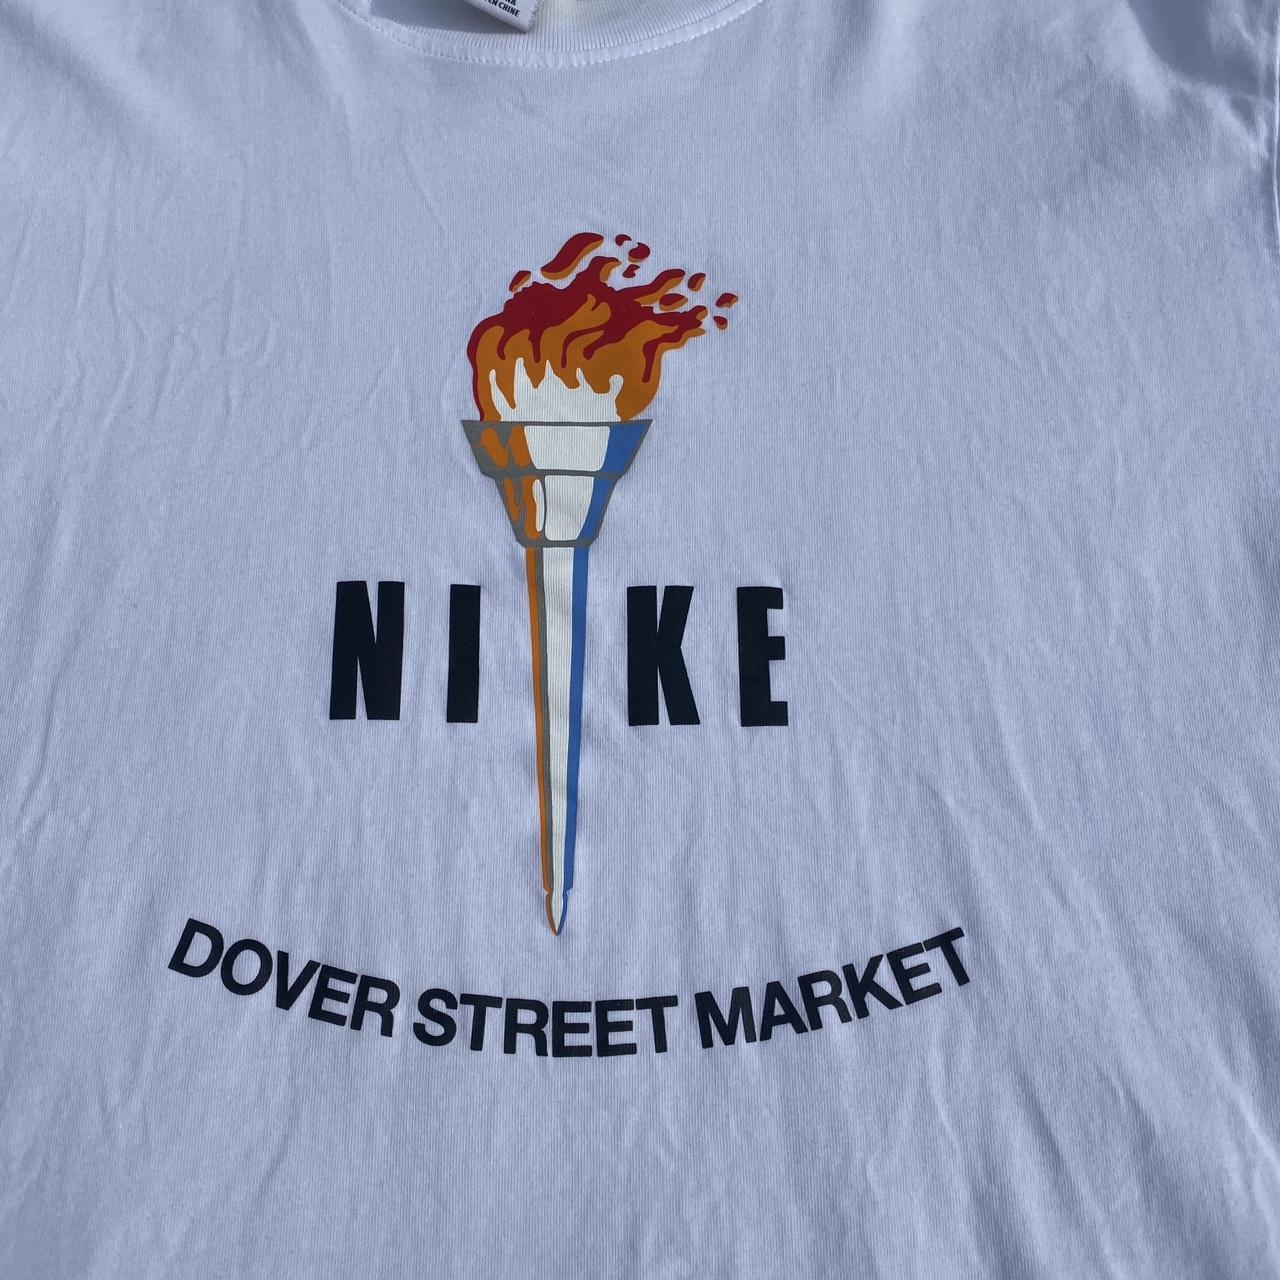 Dover Street Market Men's White and Red T-shirt (2)